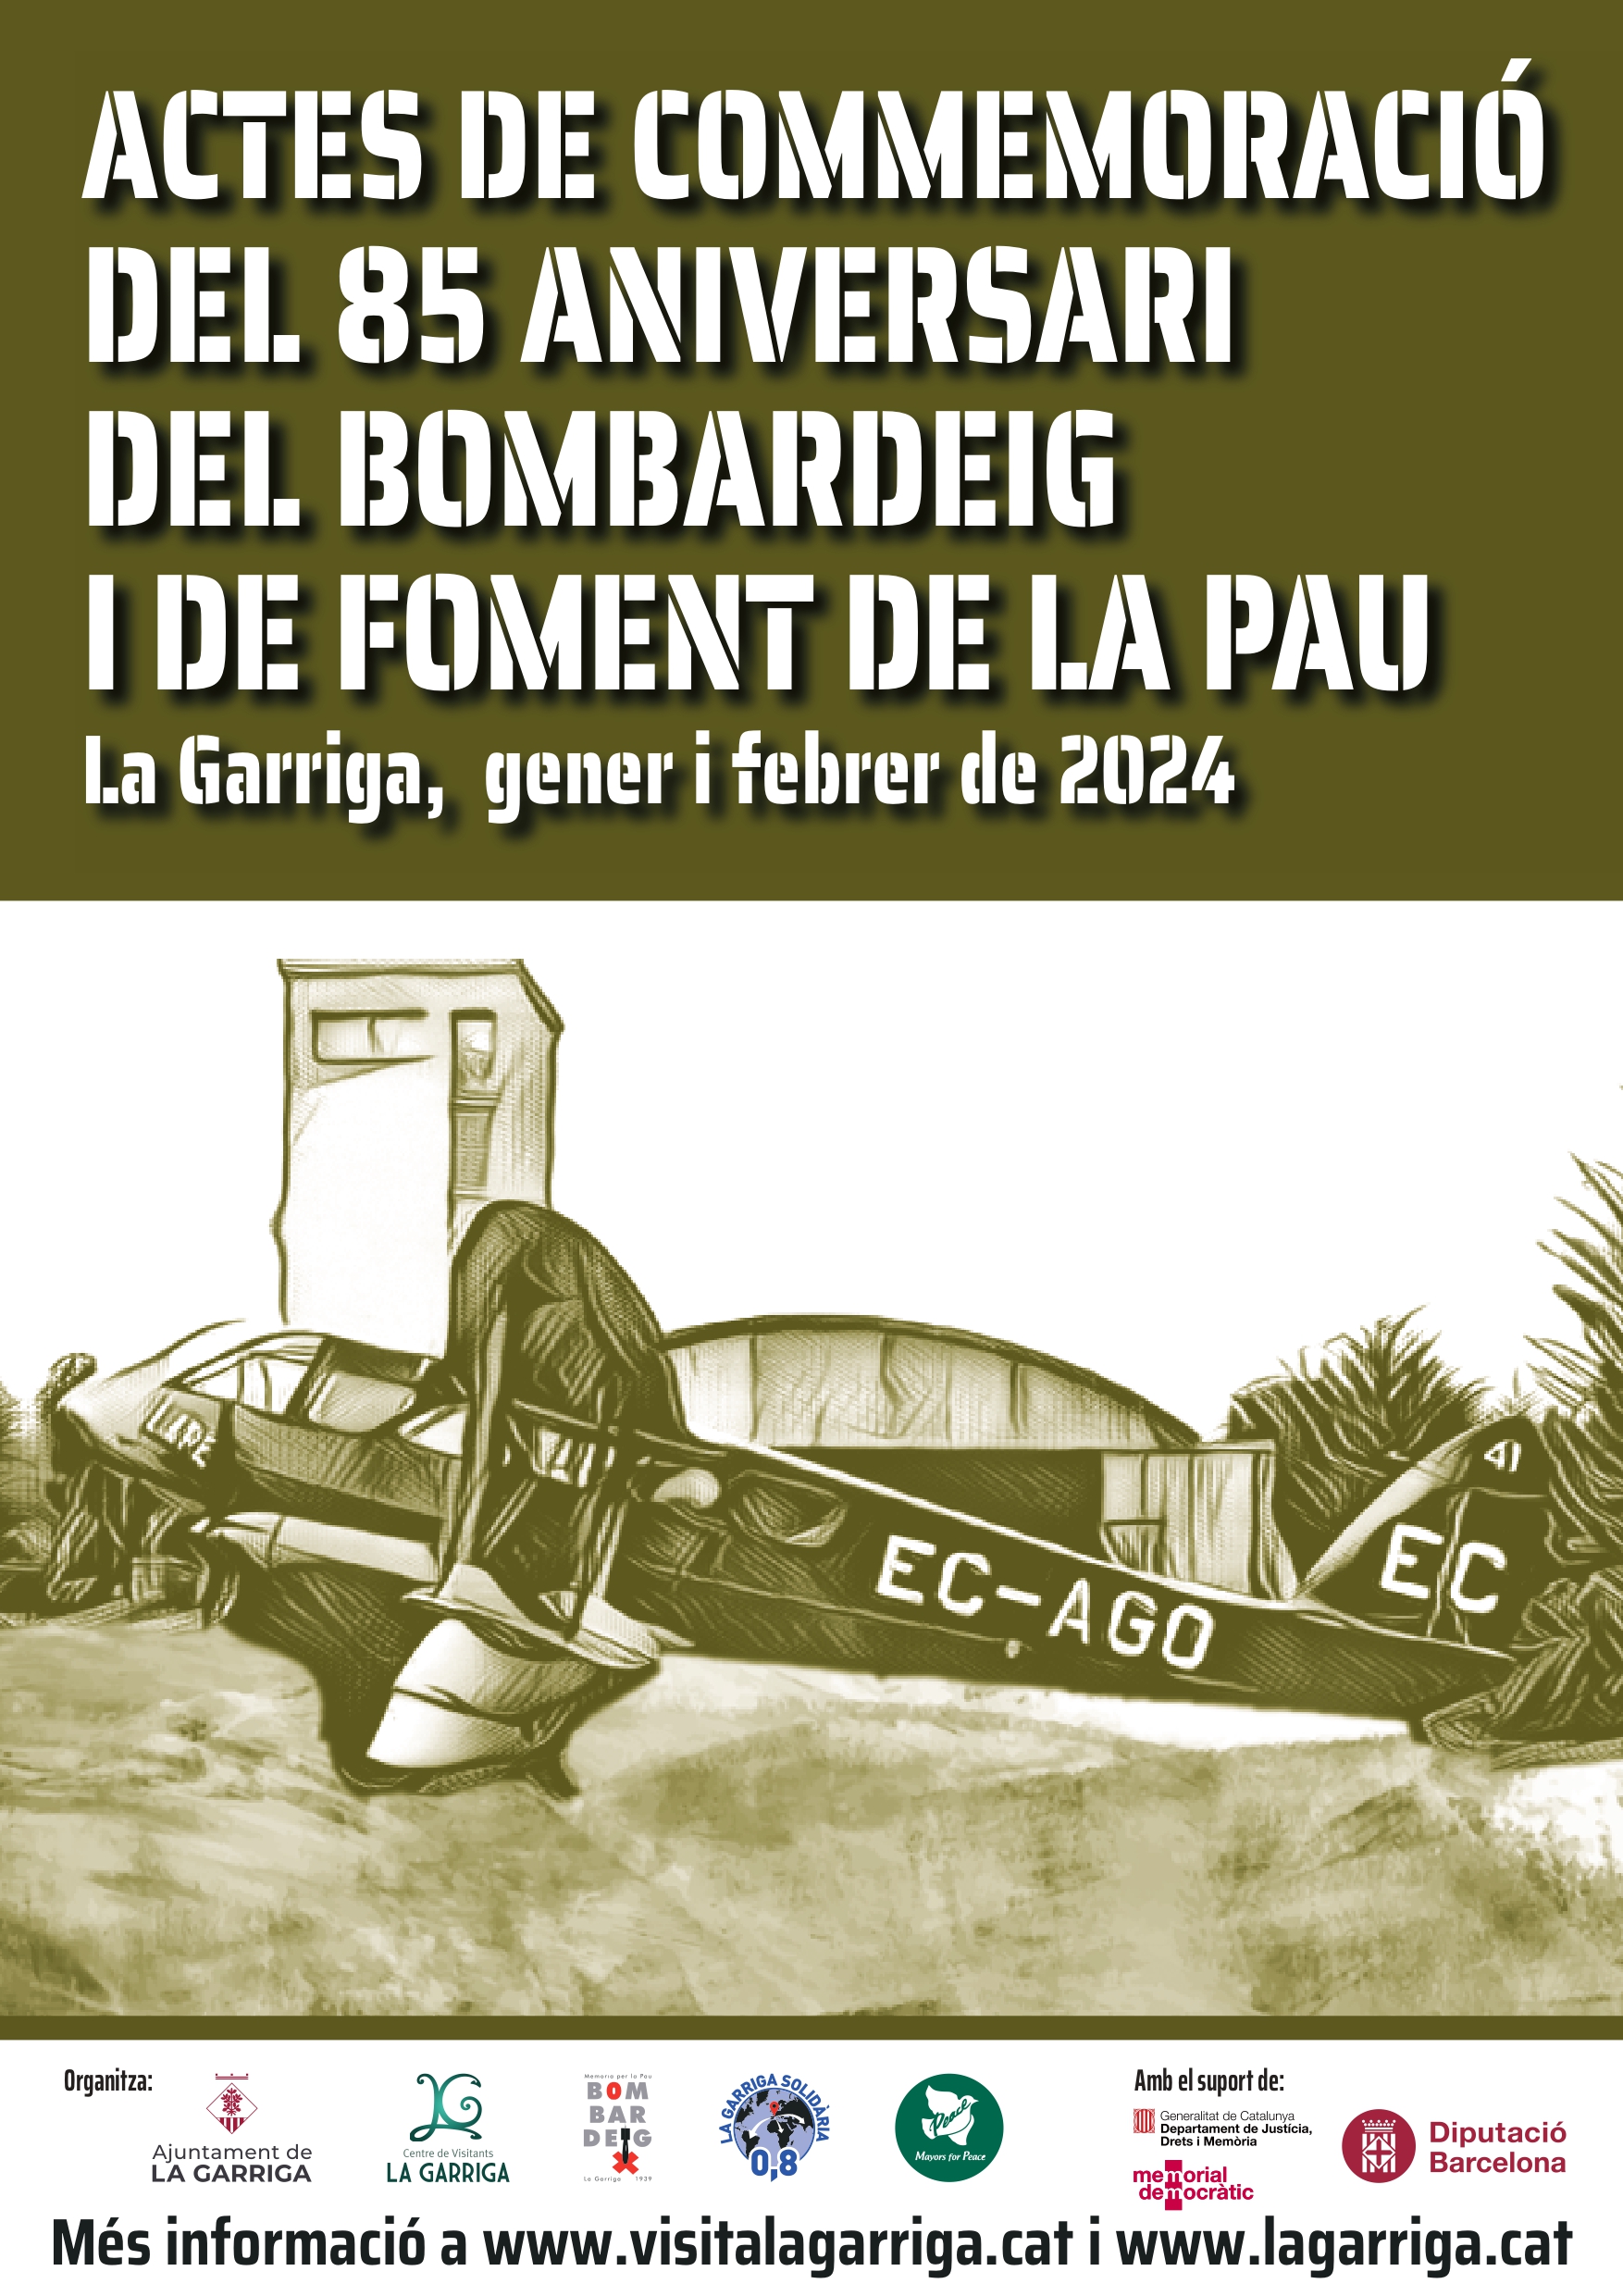 CommemoraciÃ³ Bombardeig la Garriga 2024